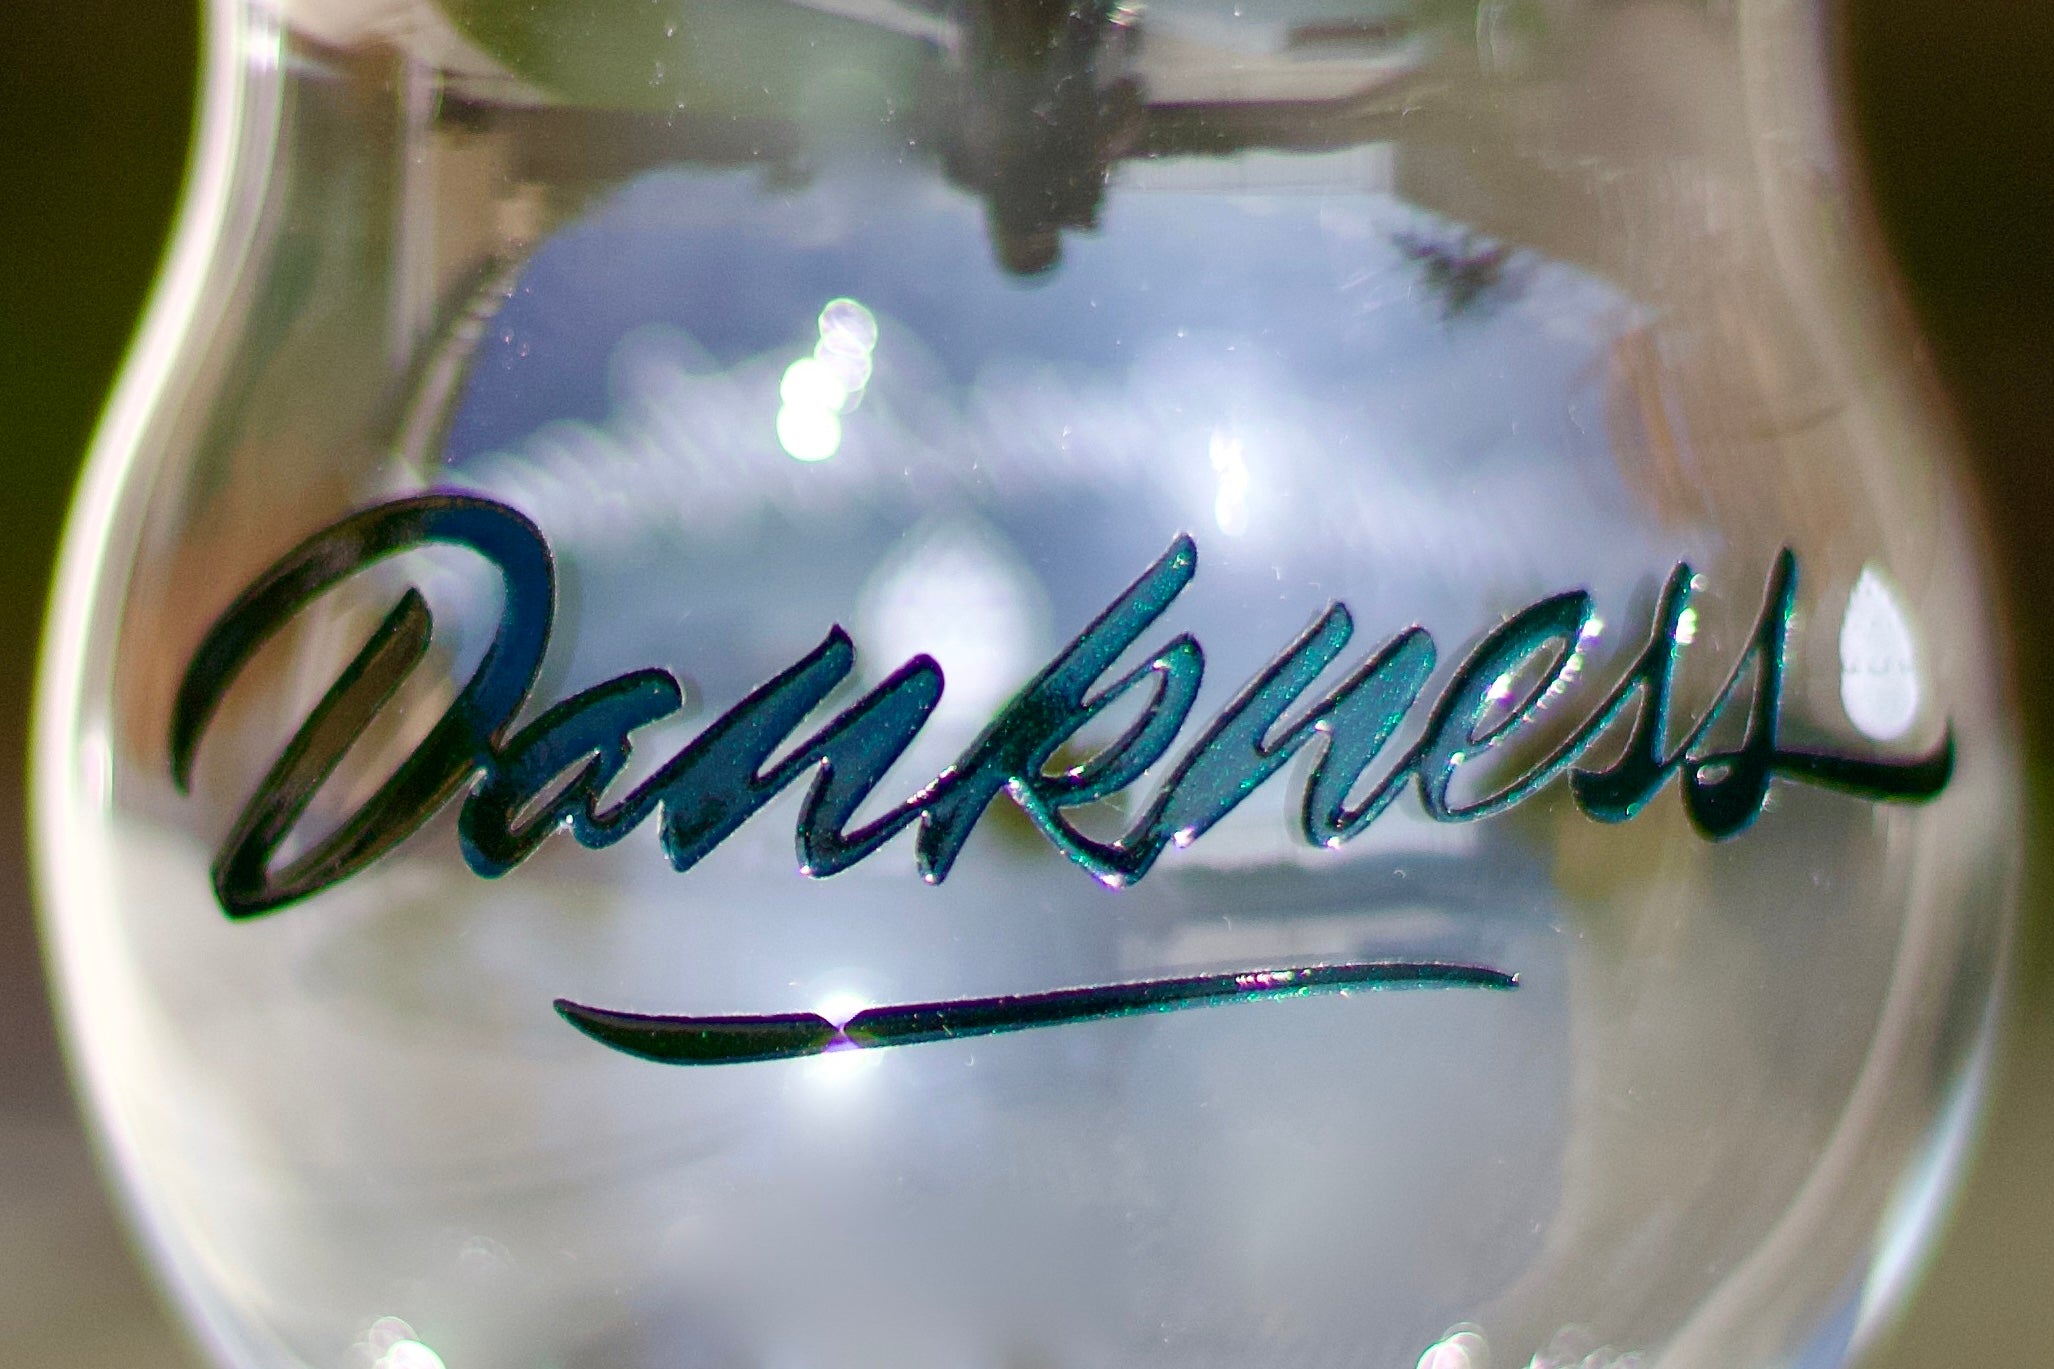 The Premium Dankness Glass | B9